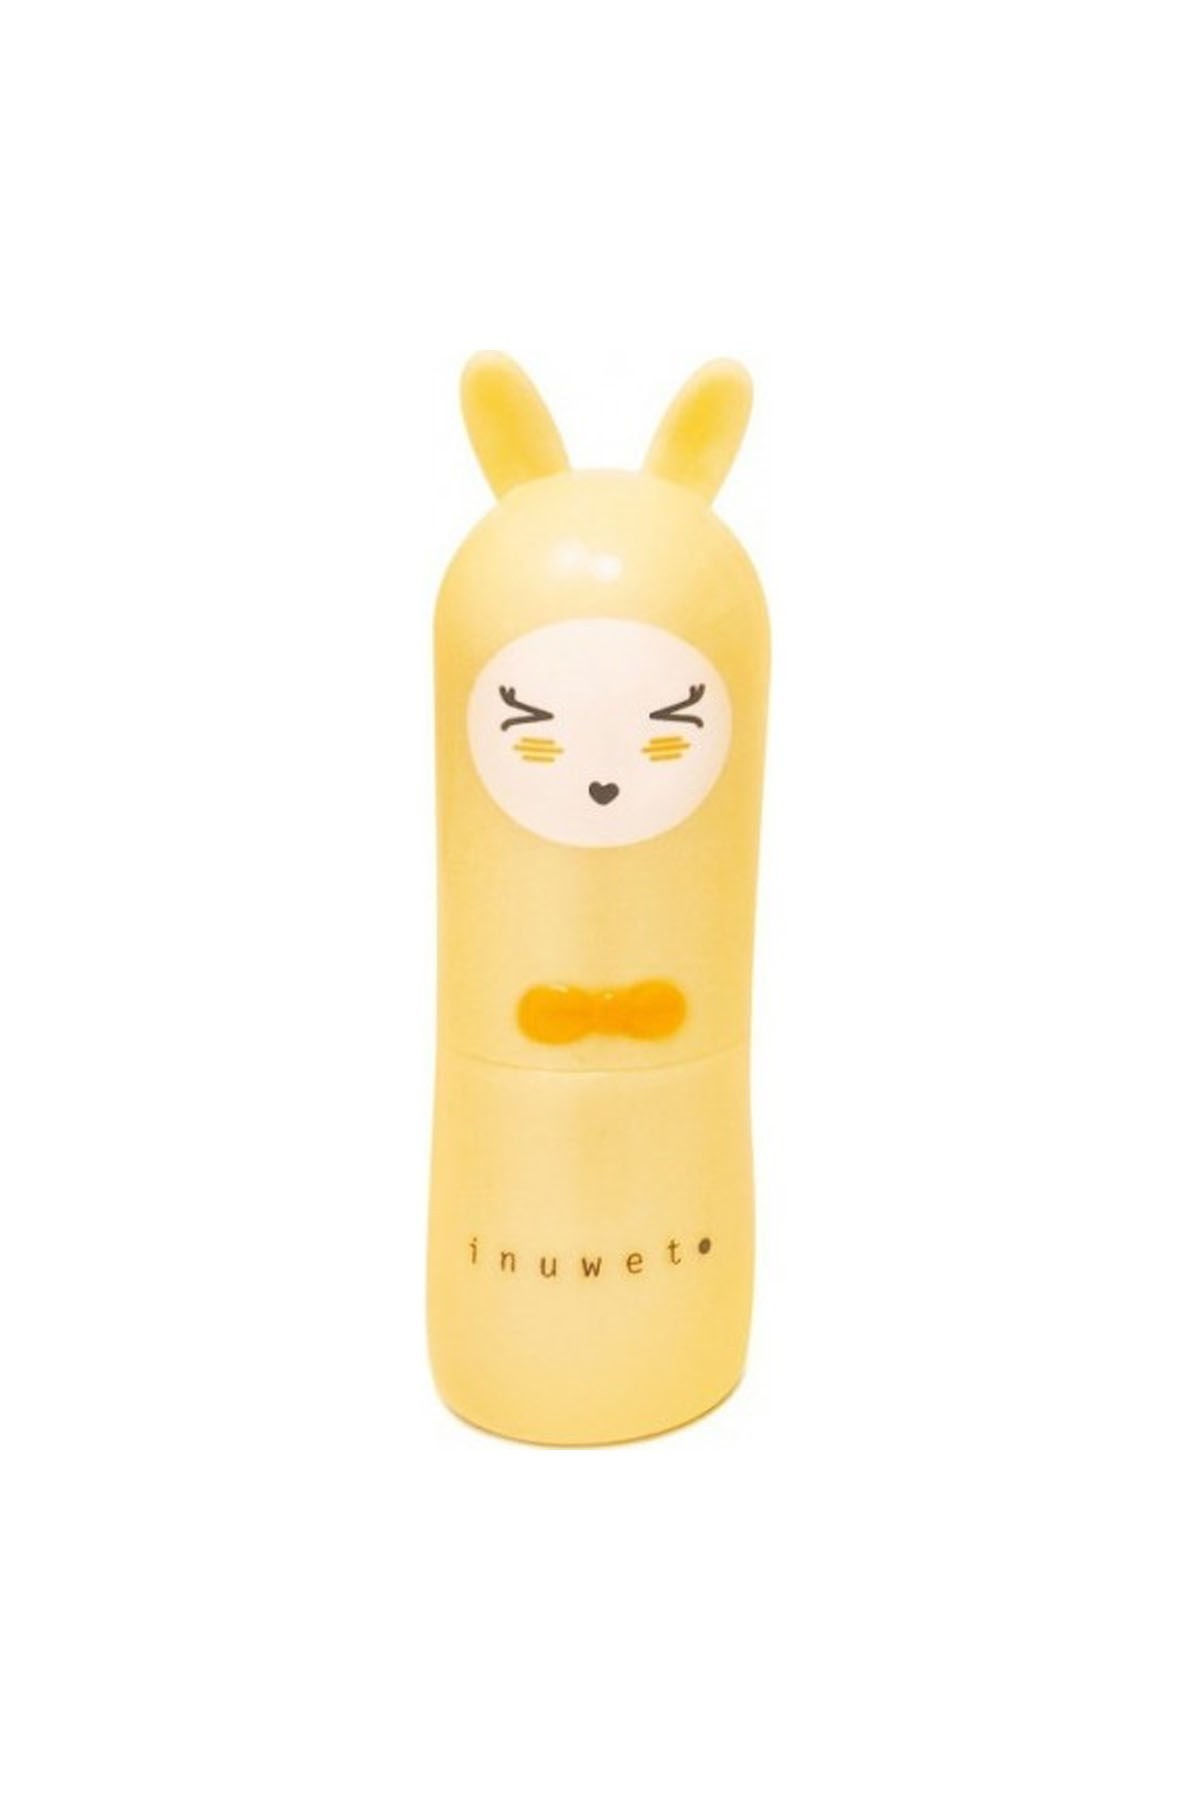 Inuwet Bunny Lip Balm Glitter Gold Pineapple Sarı